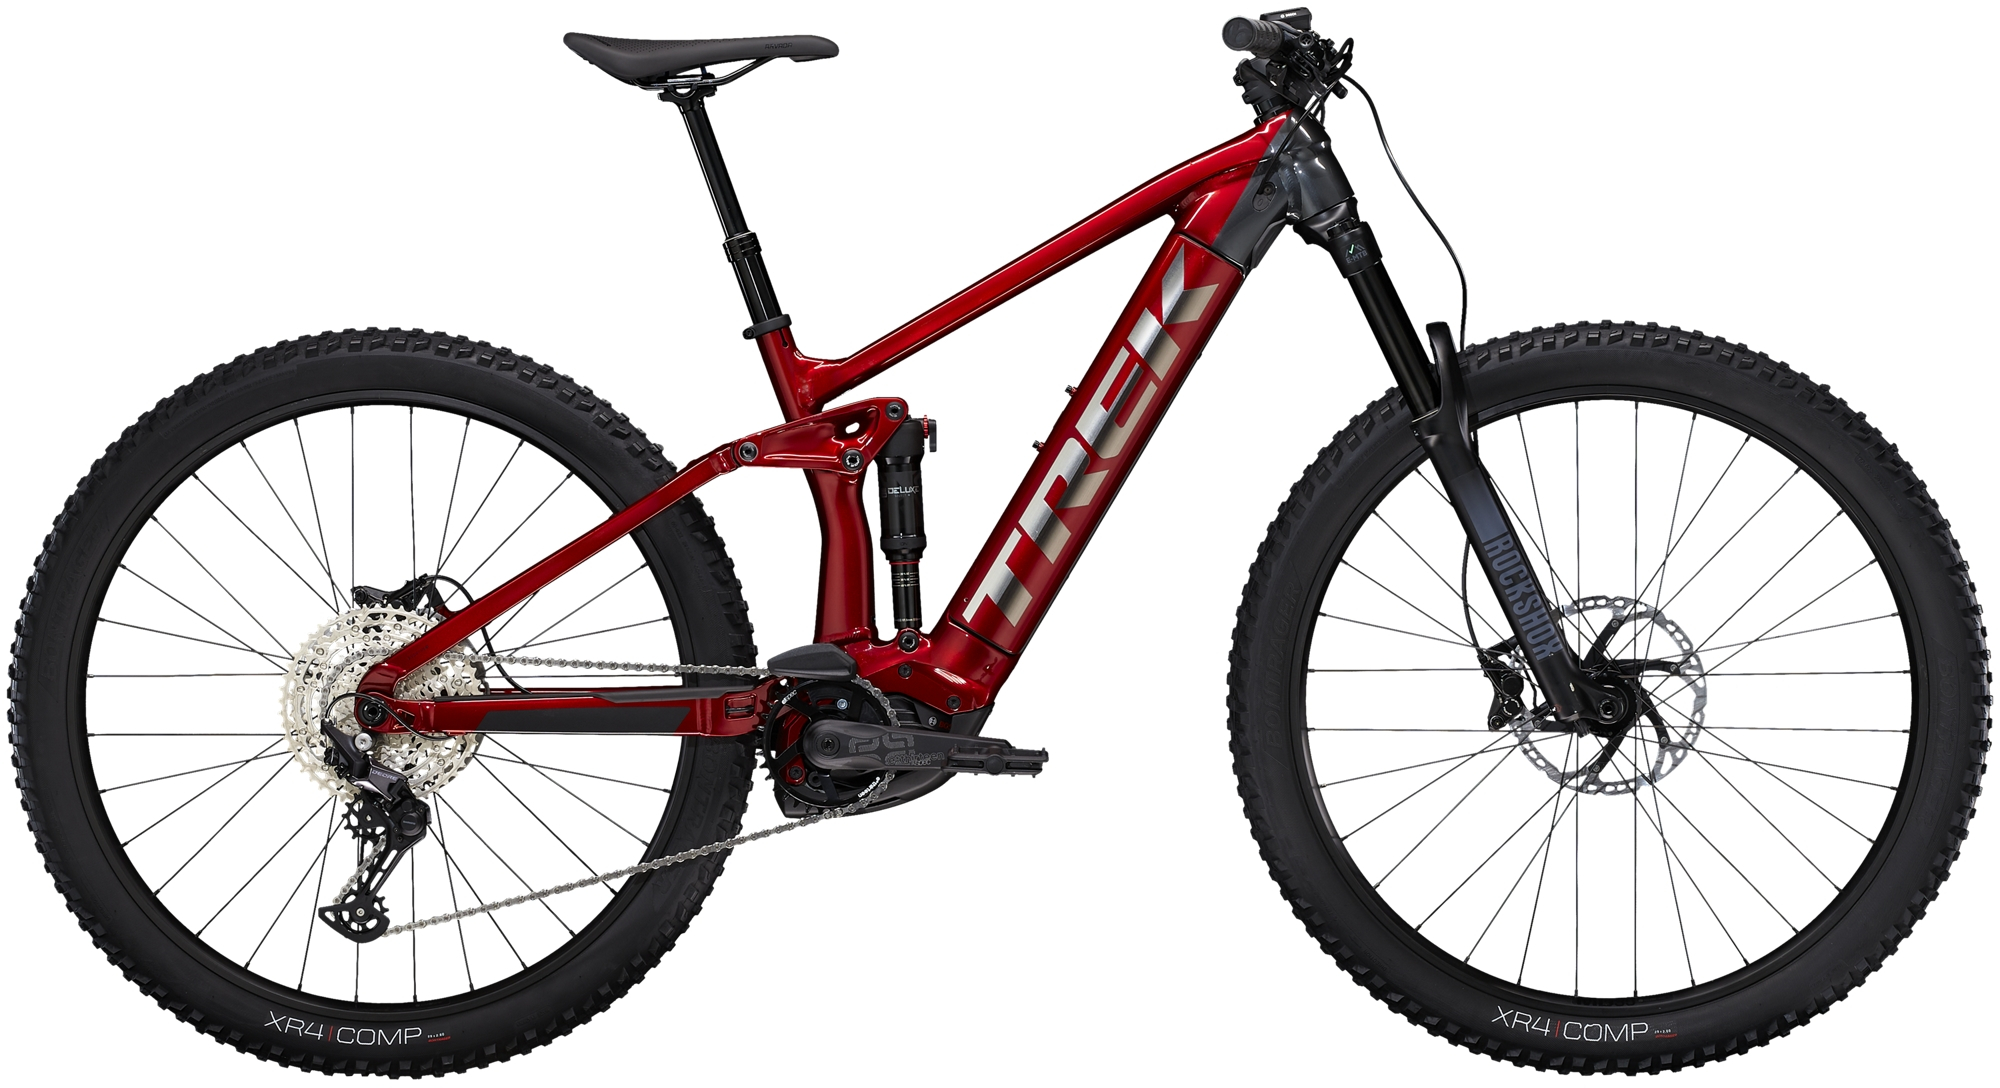 2022 Trek Rail 5 500w Electric Mountain Bike in Crimson